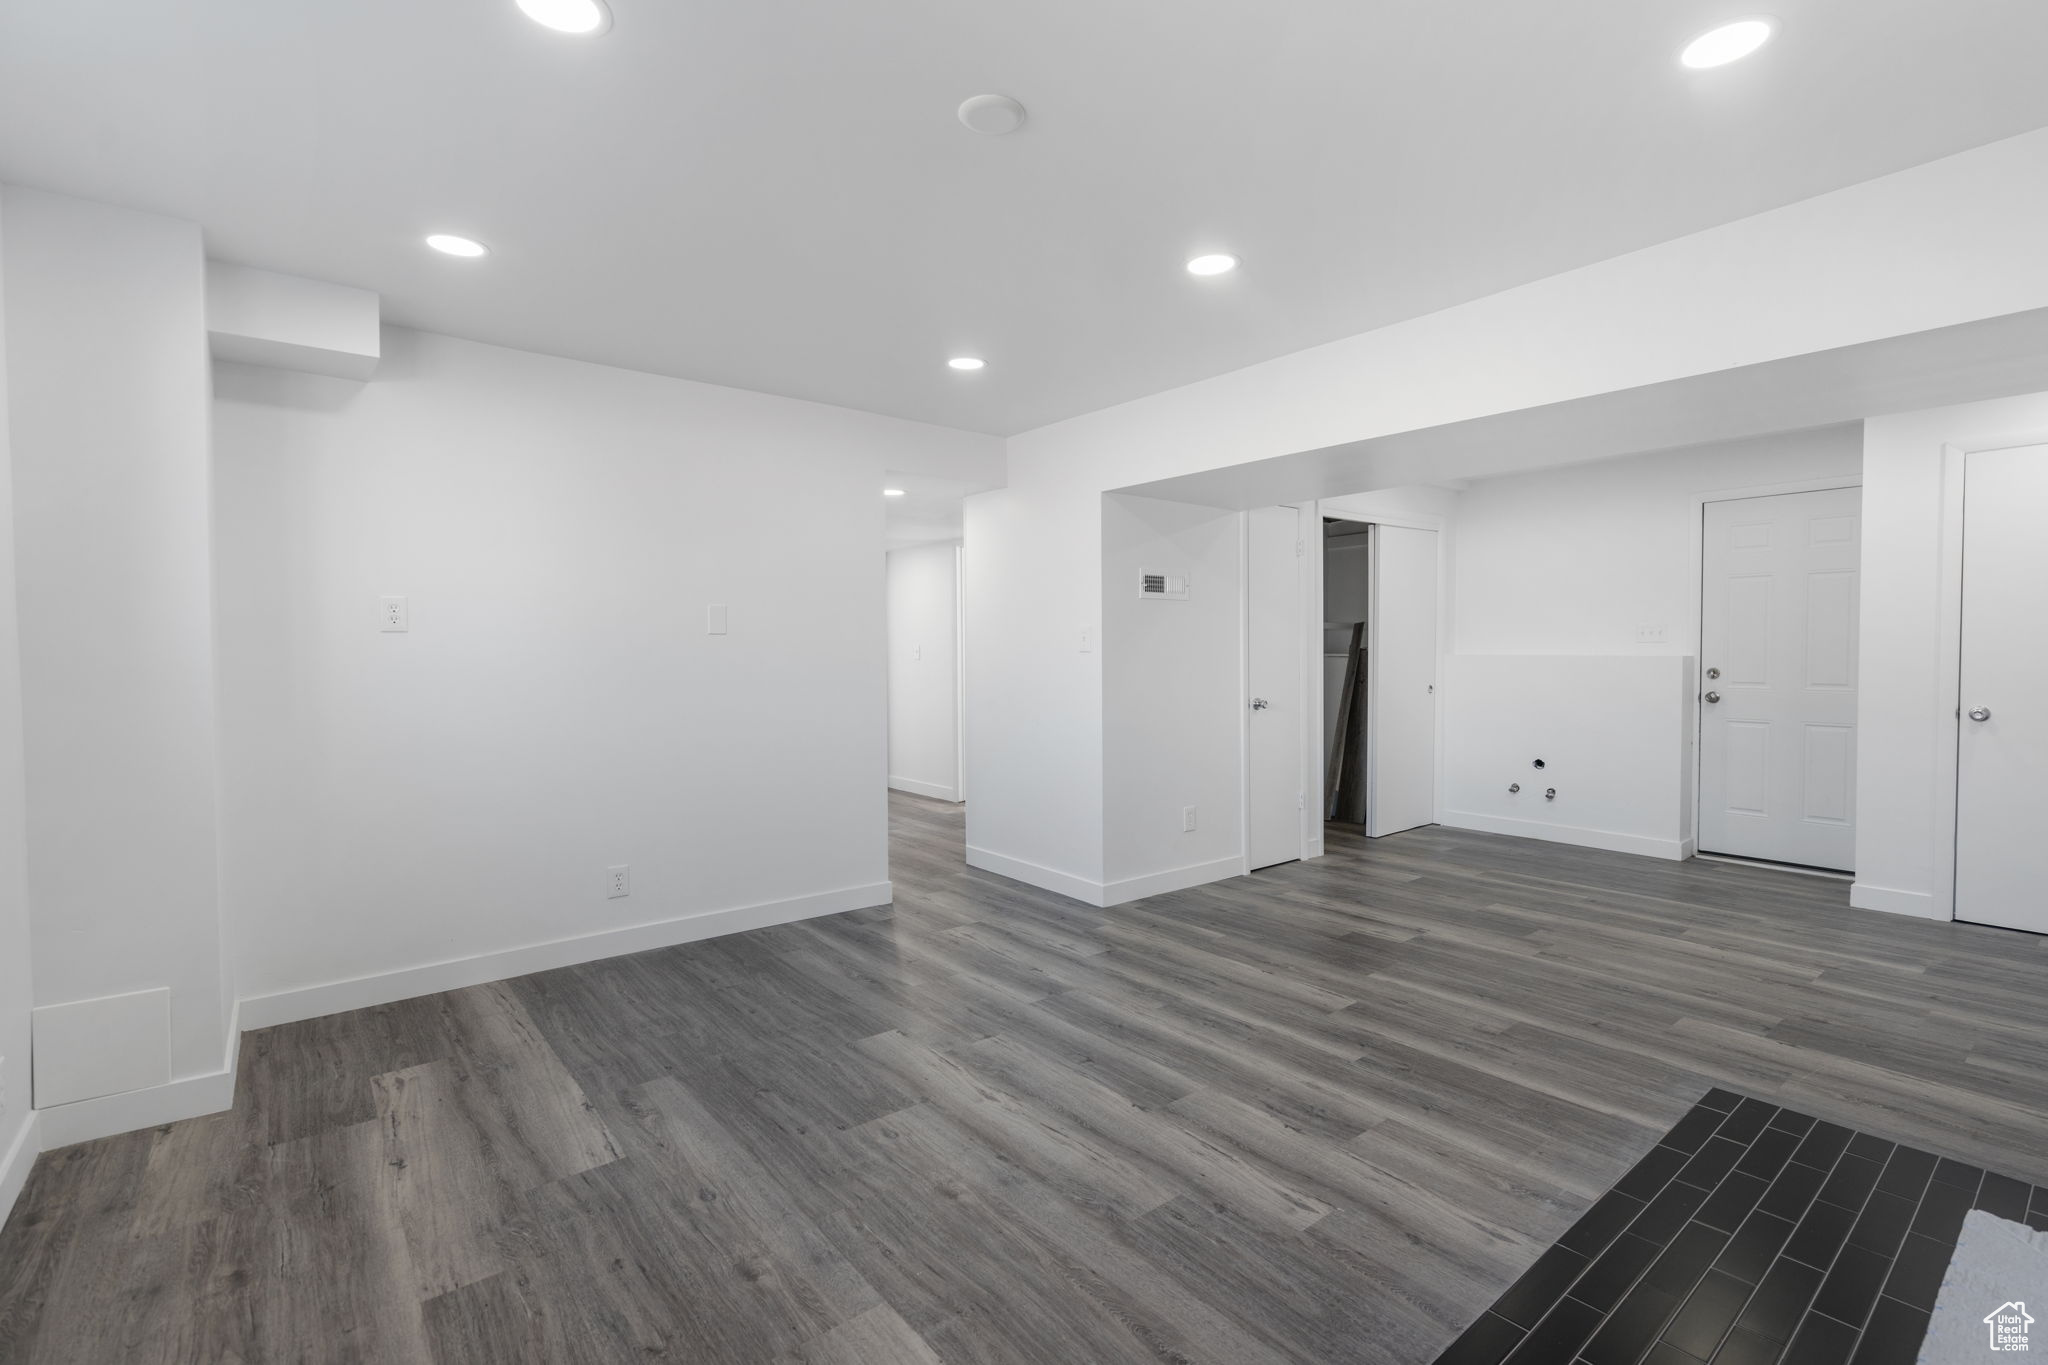 Basement featuring dark hardwood / wood-style floors